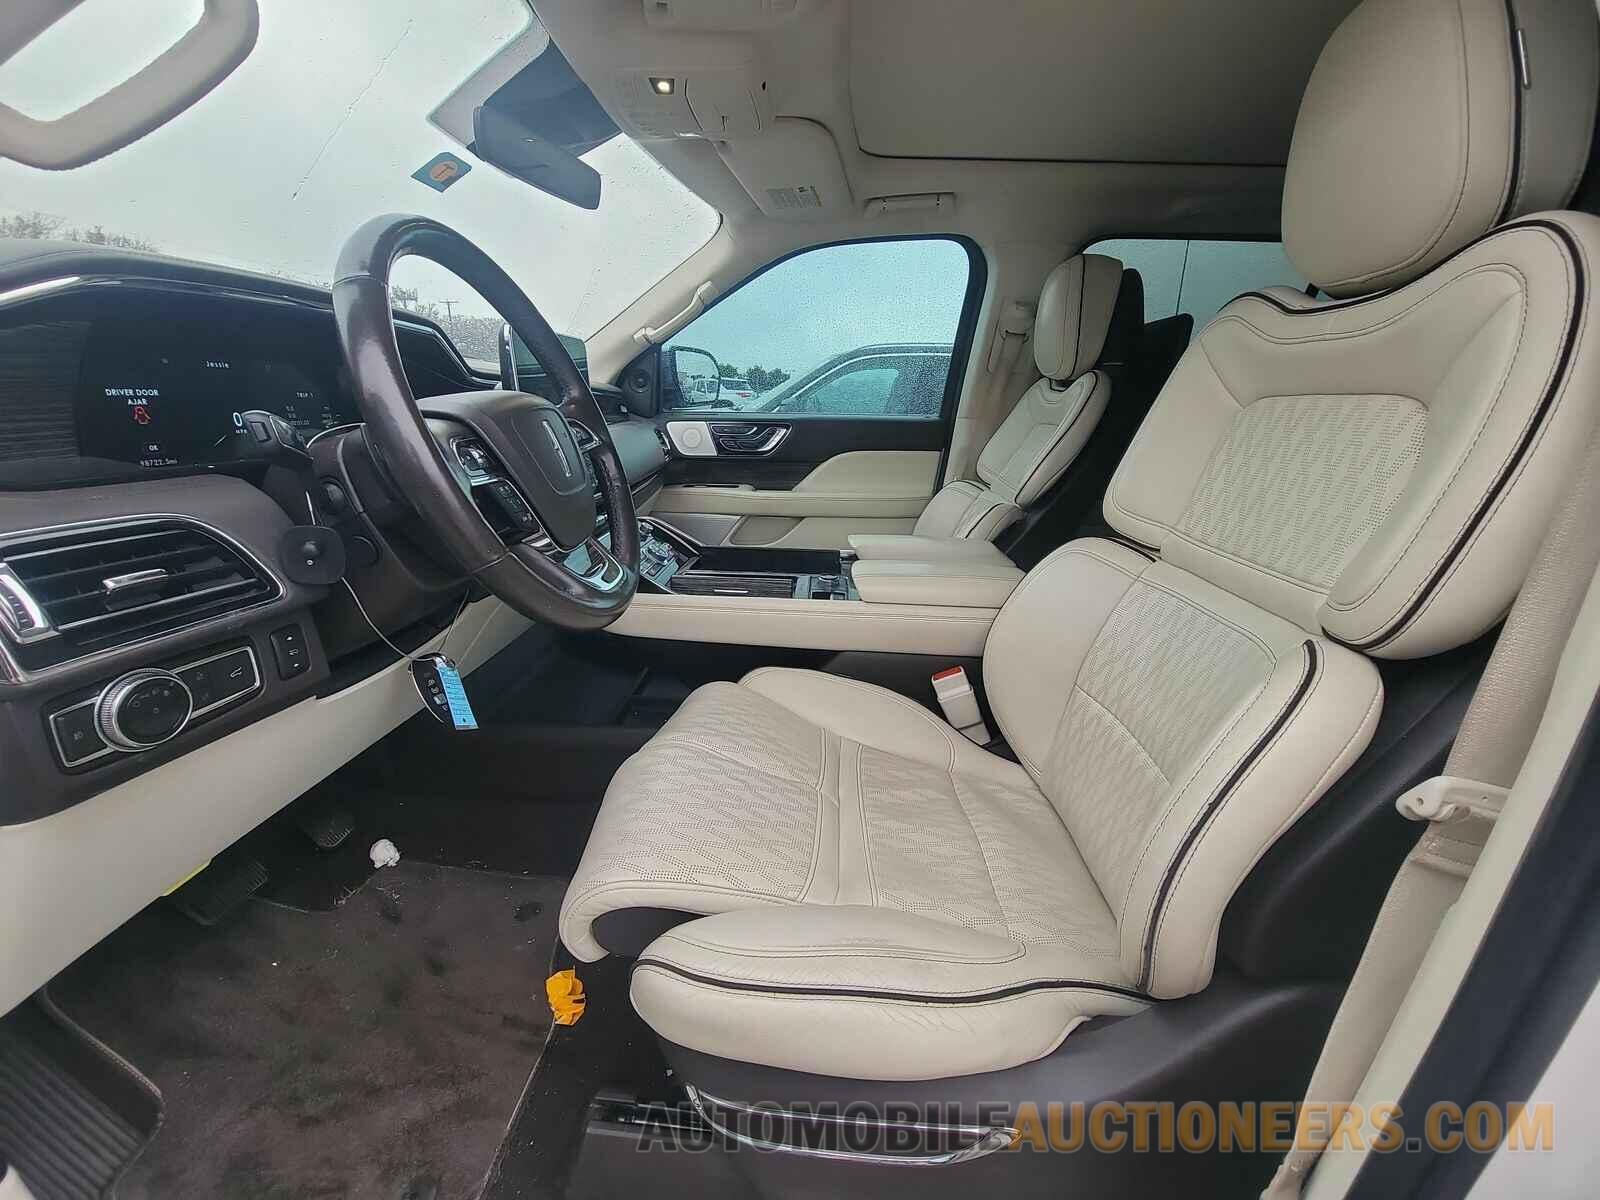 5LMJJ2TT2JEL20713 Lincoln Navigator 2018